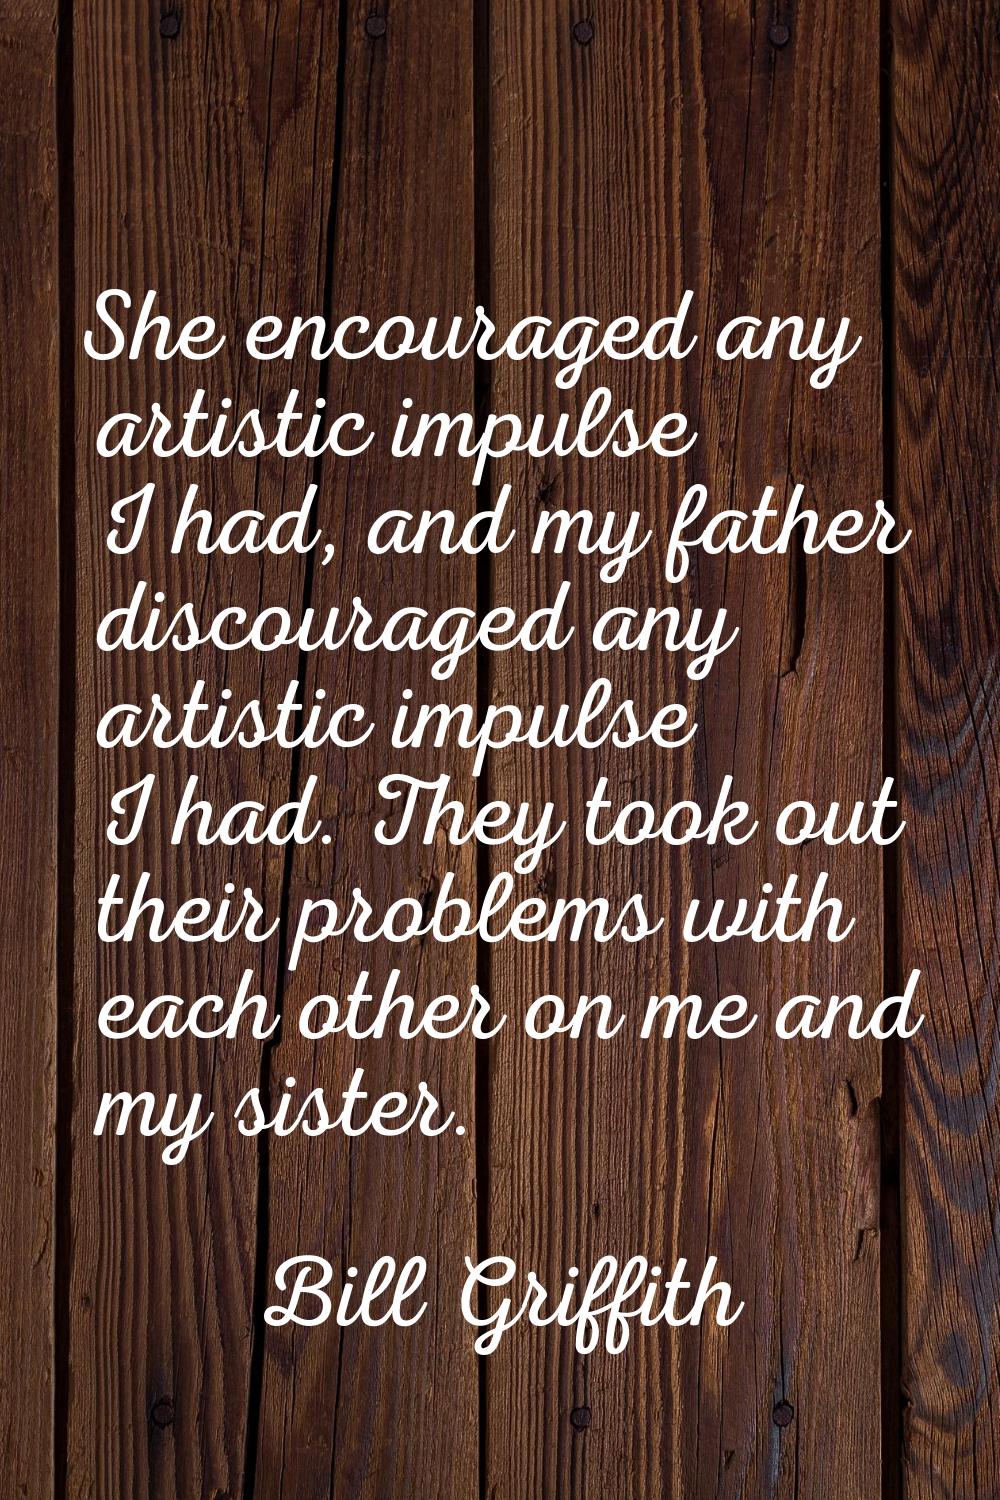 She encouraged any artistic impulse I had, and my father discouraged any artistic impulse I had. Th